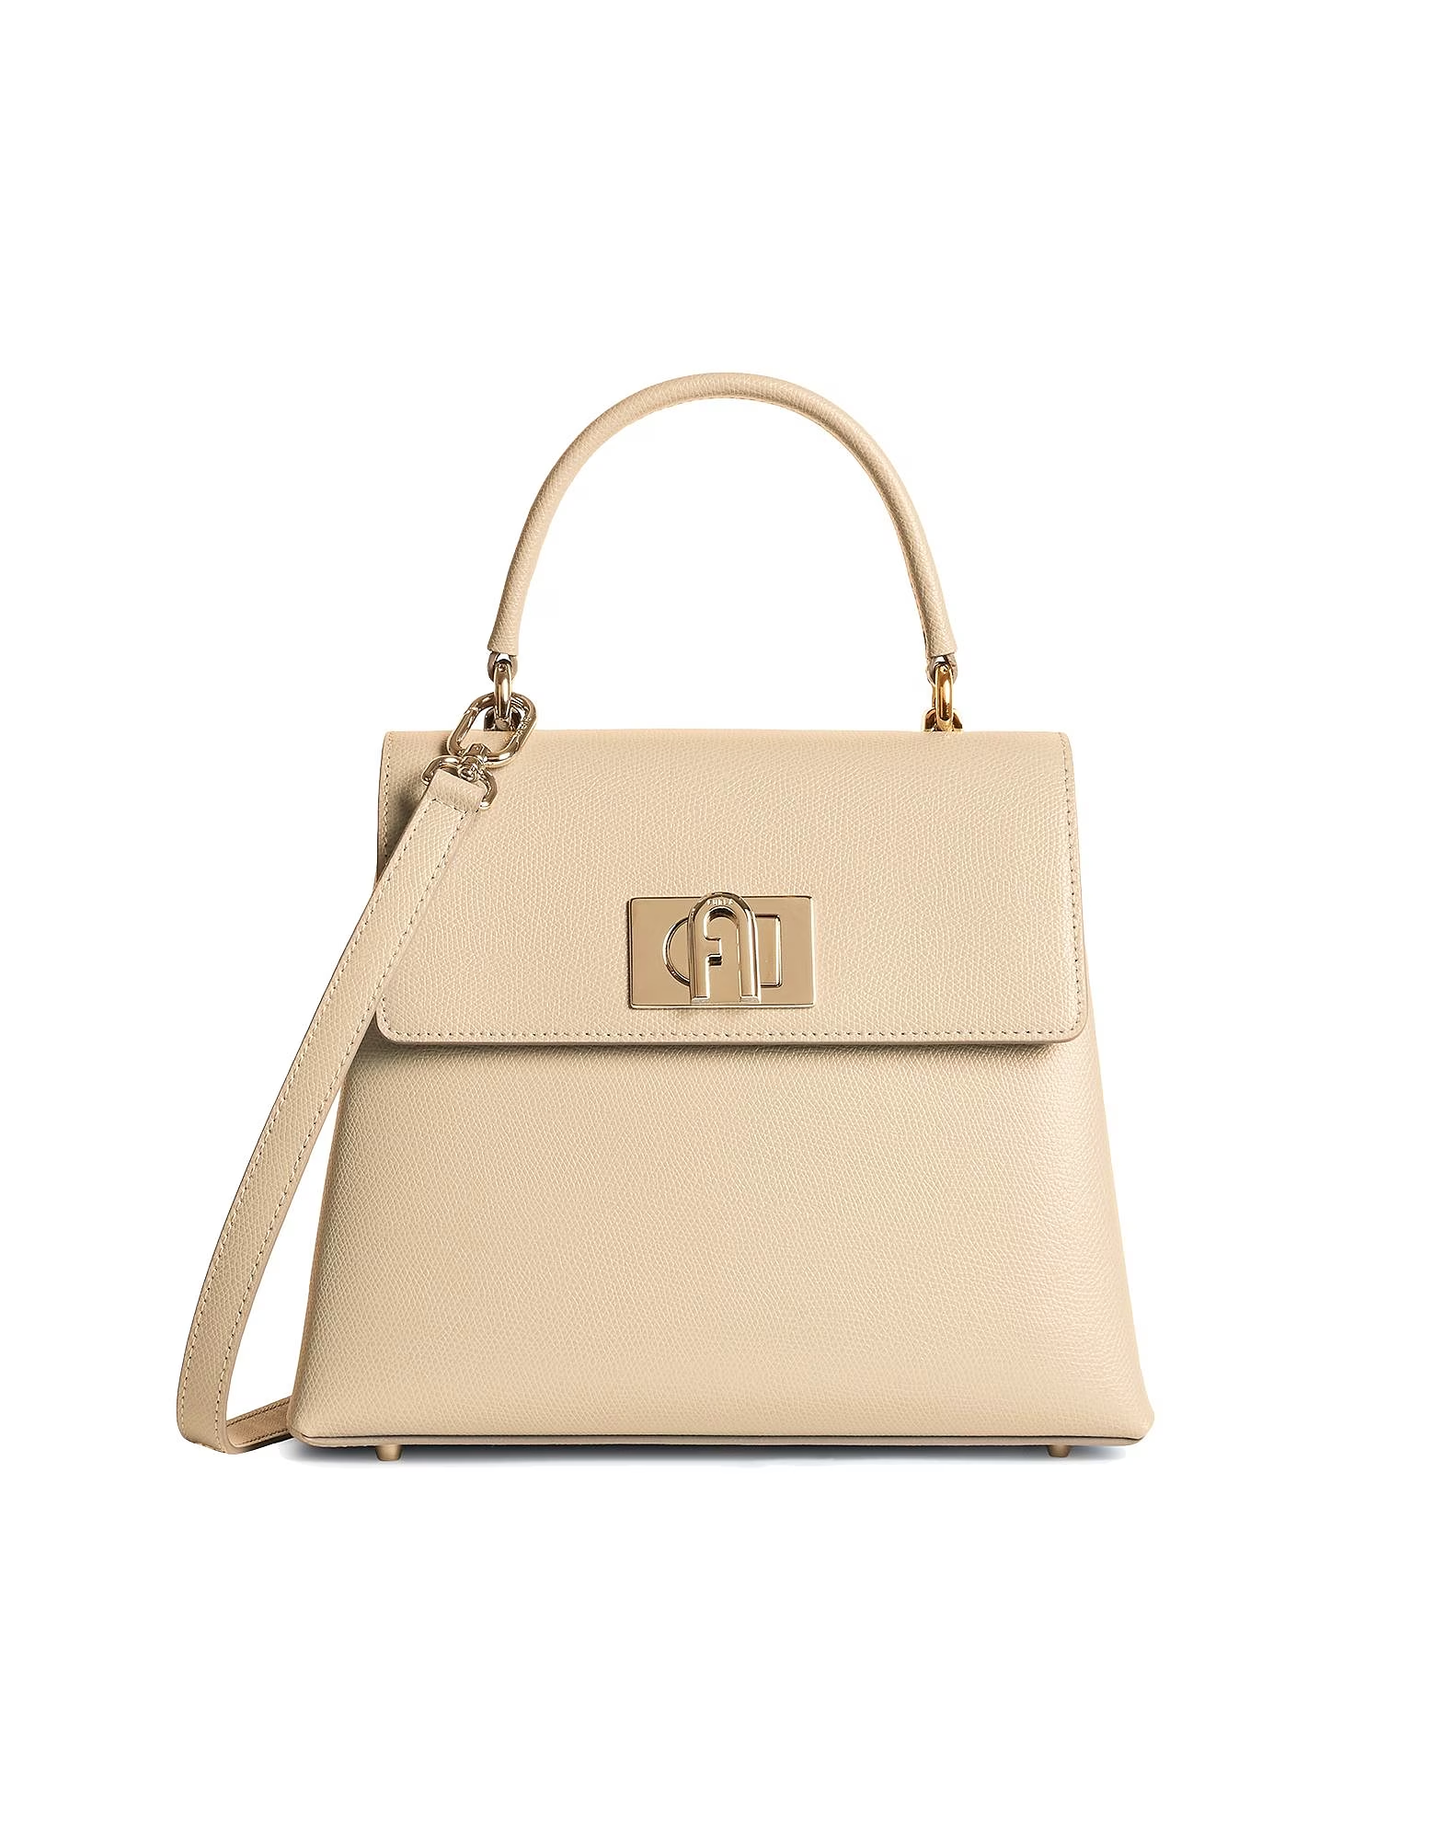 PARIOLI BAGS - Discount Designer Handbags Outlet | FURLA 1927 MINI TOP HANDLE Handbags